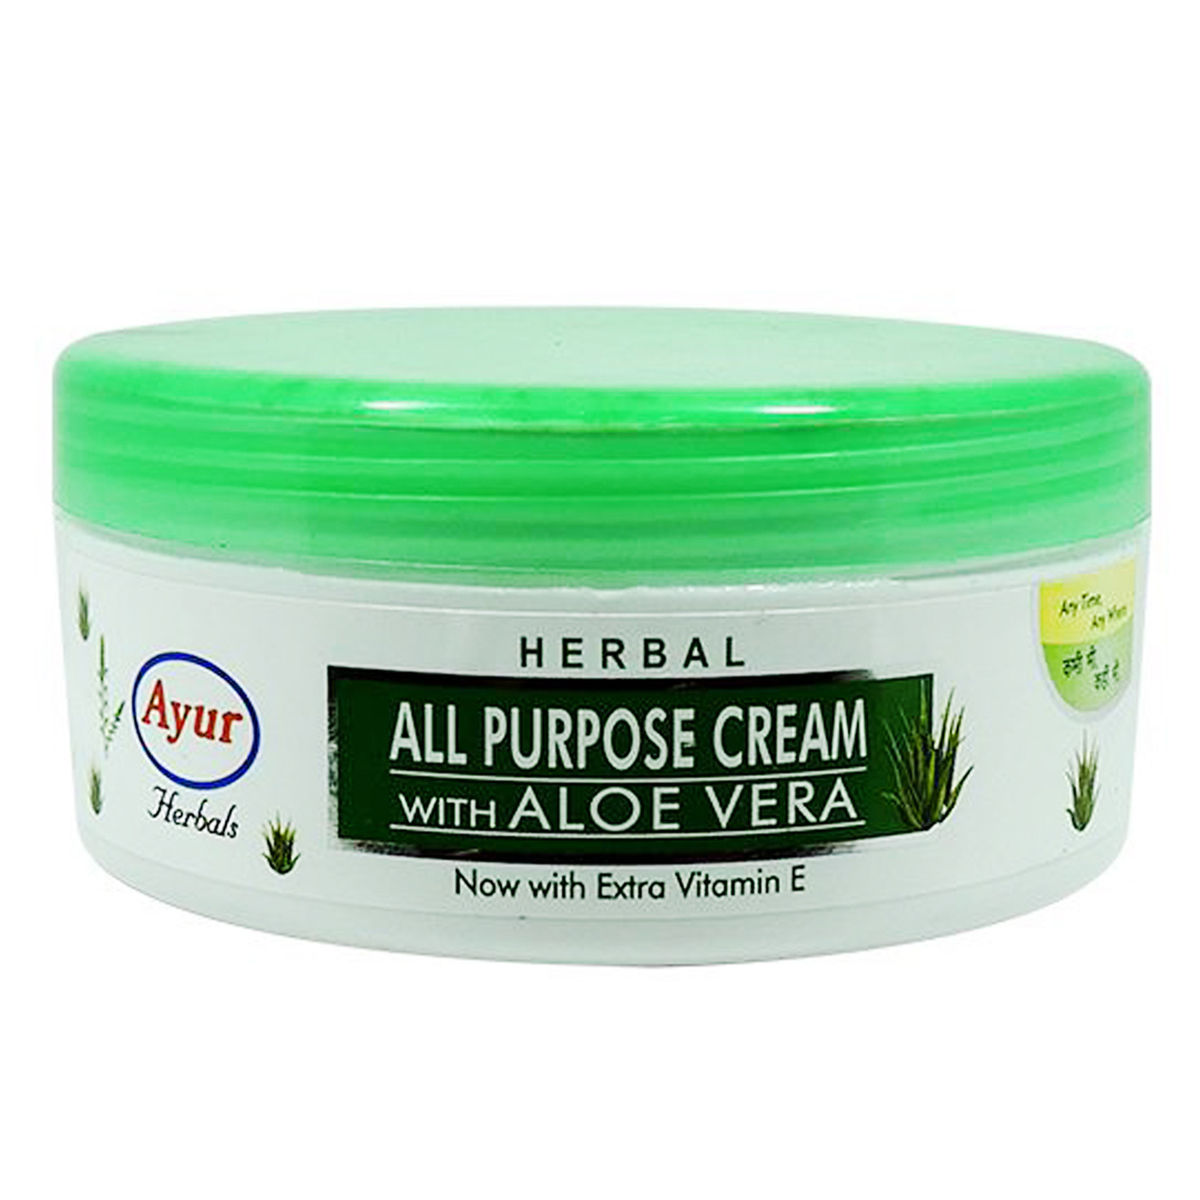 Buy Ayur Herbal All Purpose Cream With Aloe Vera, 80 gm Online